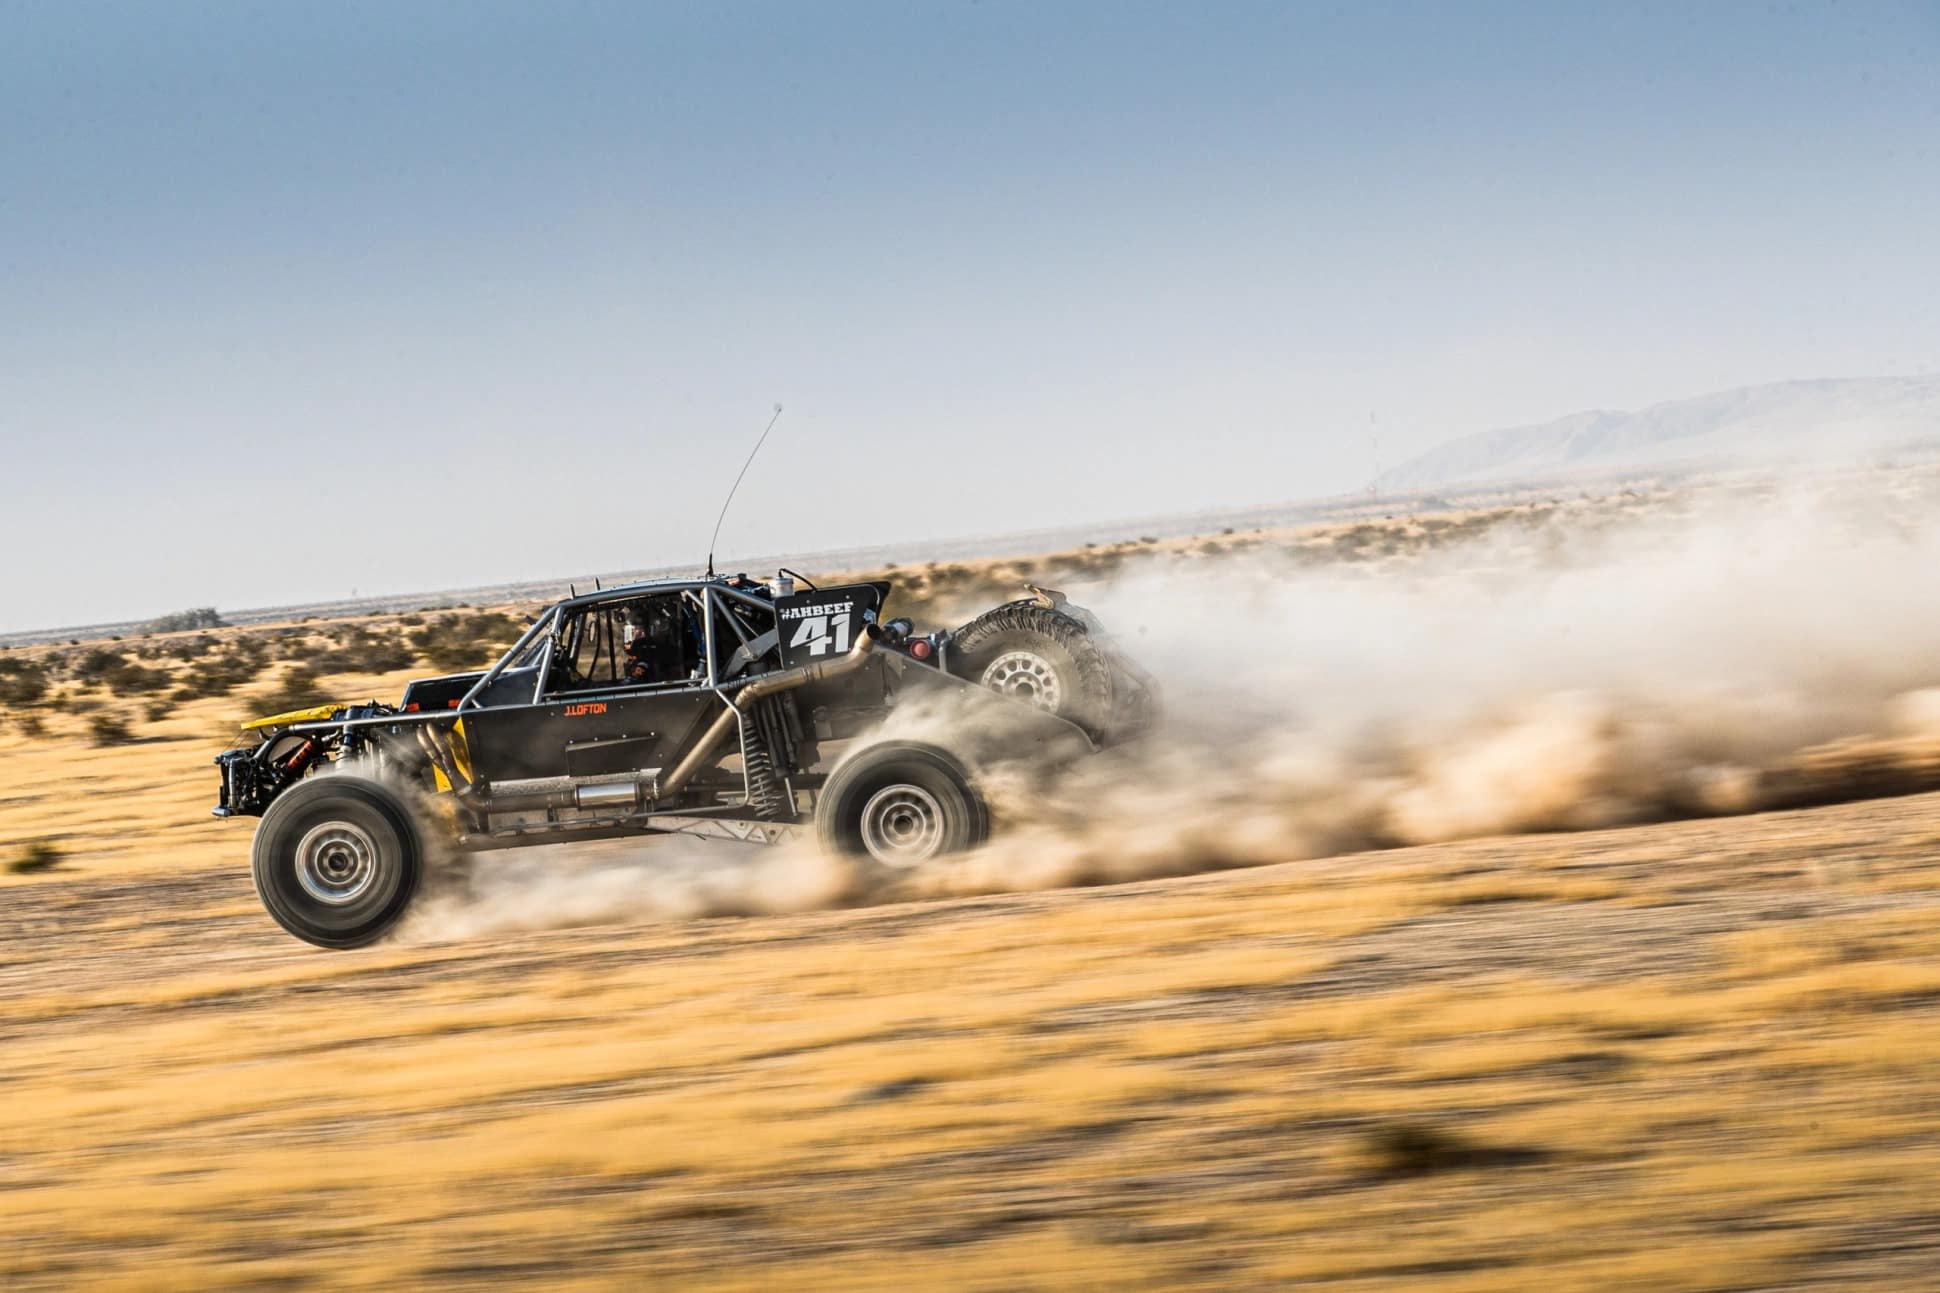 A racing truck driving across dirt terrain throwing dust behind it.